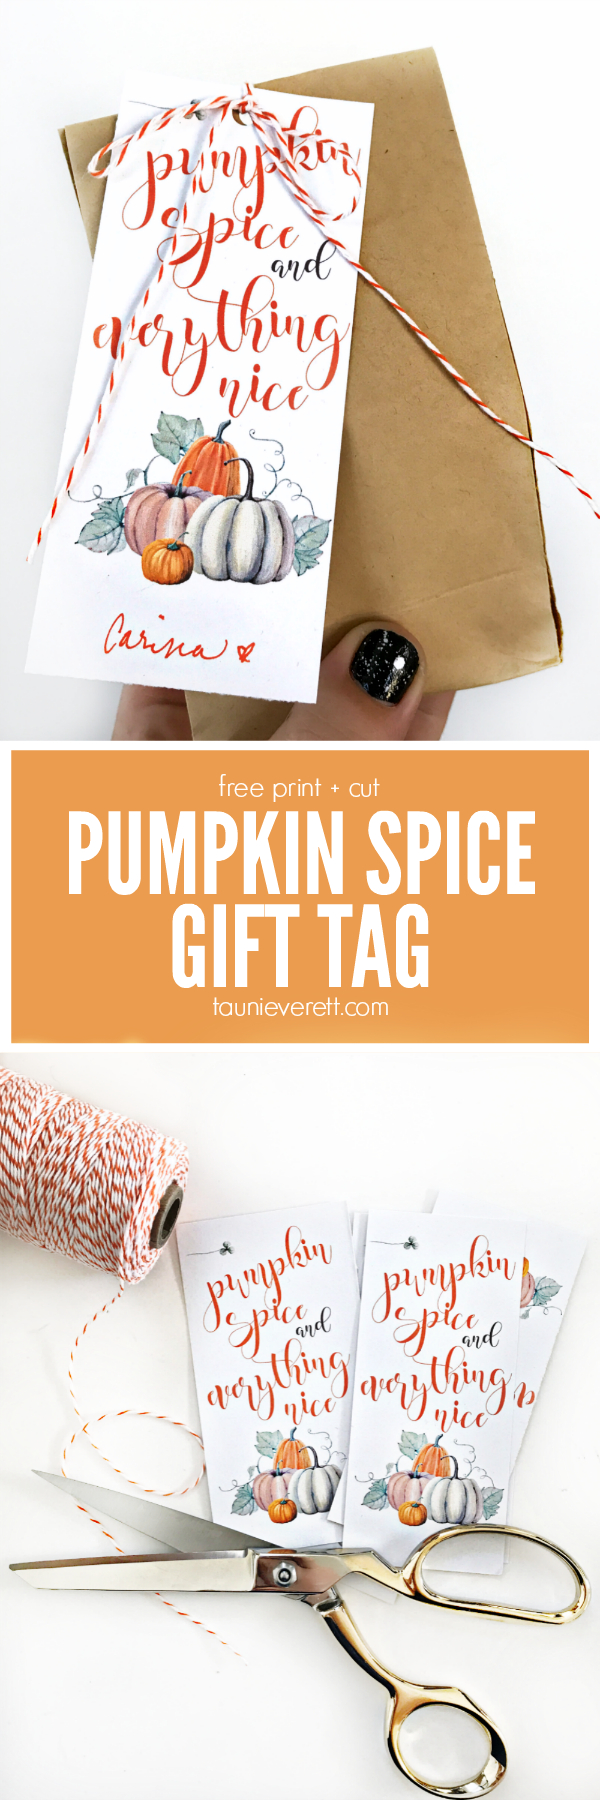 Free Print And Cut Pumpkin Spice Gift Tag #pumpkin #pumpkinspice - Free Printable Pumpkin Gift Tags